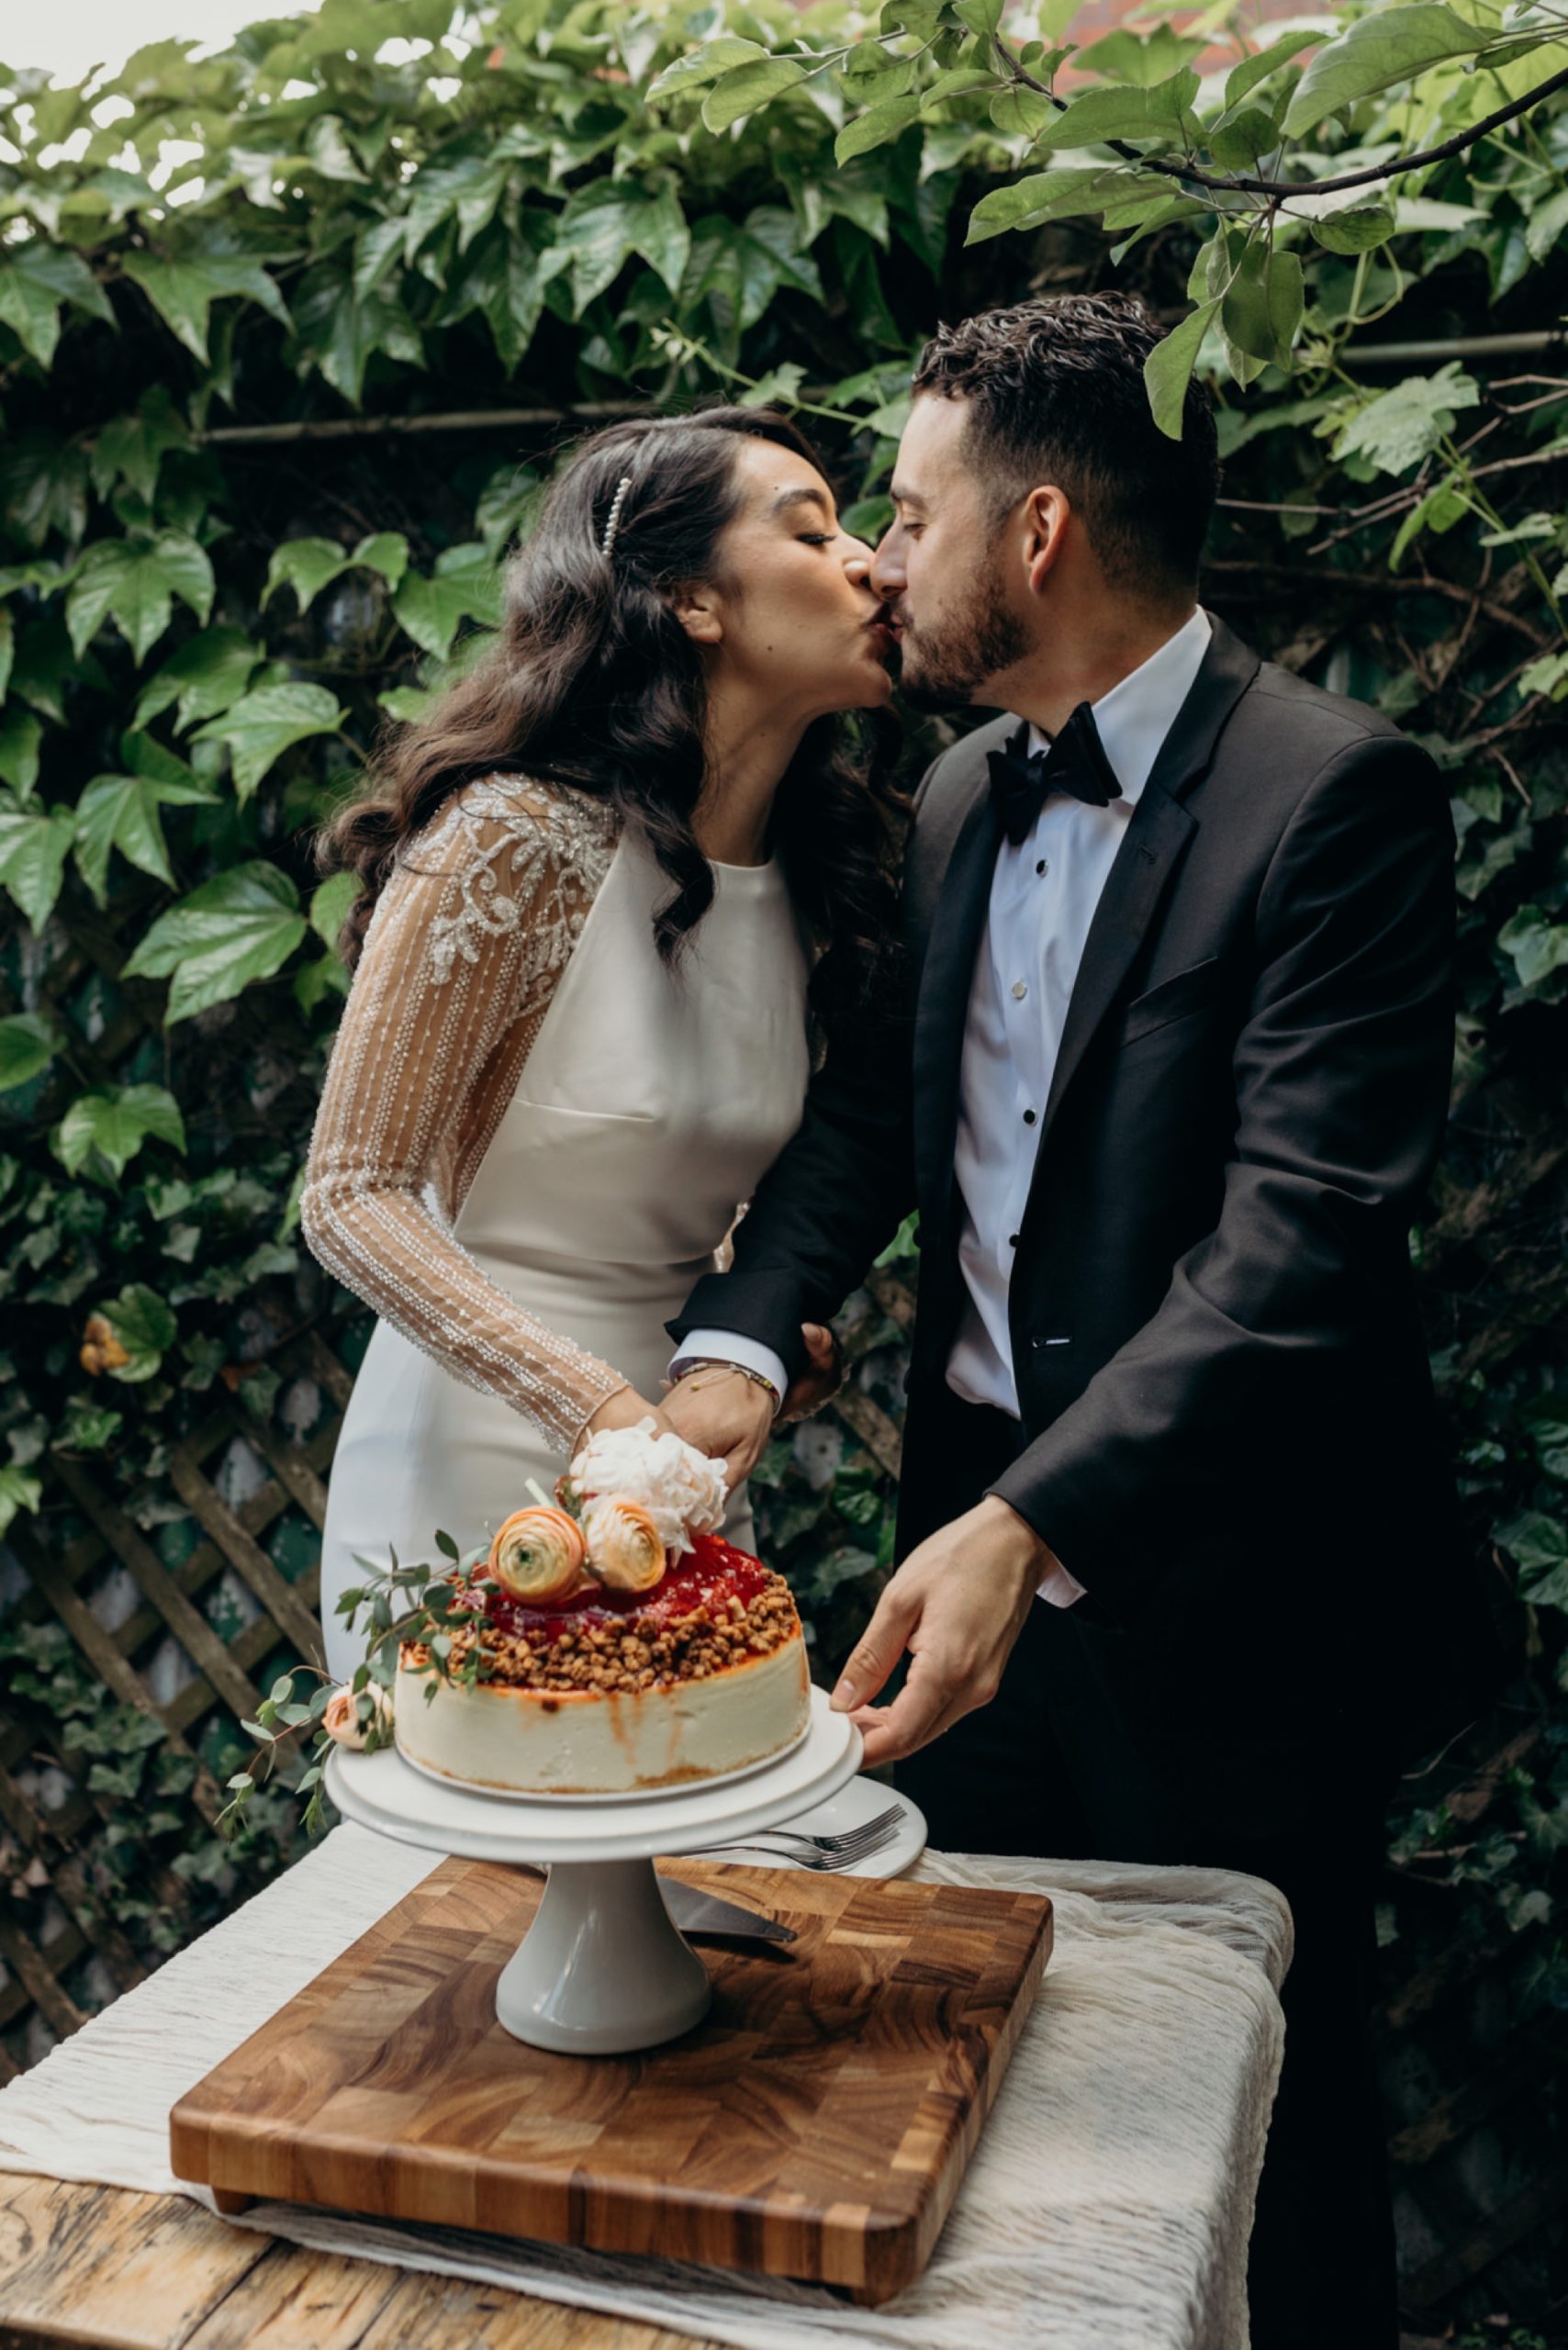 bride and groom cut their wedding cake during their reception at aurora in brooklyn, new york city